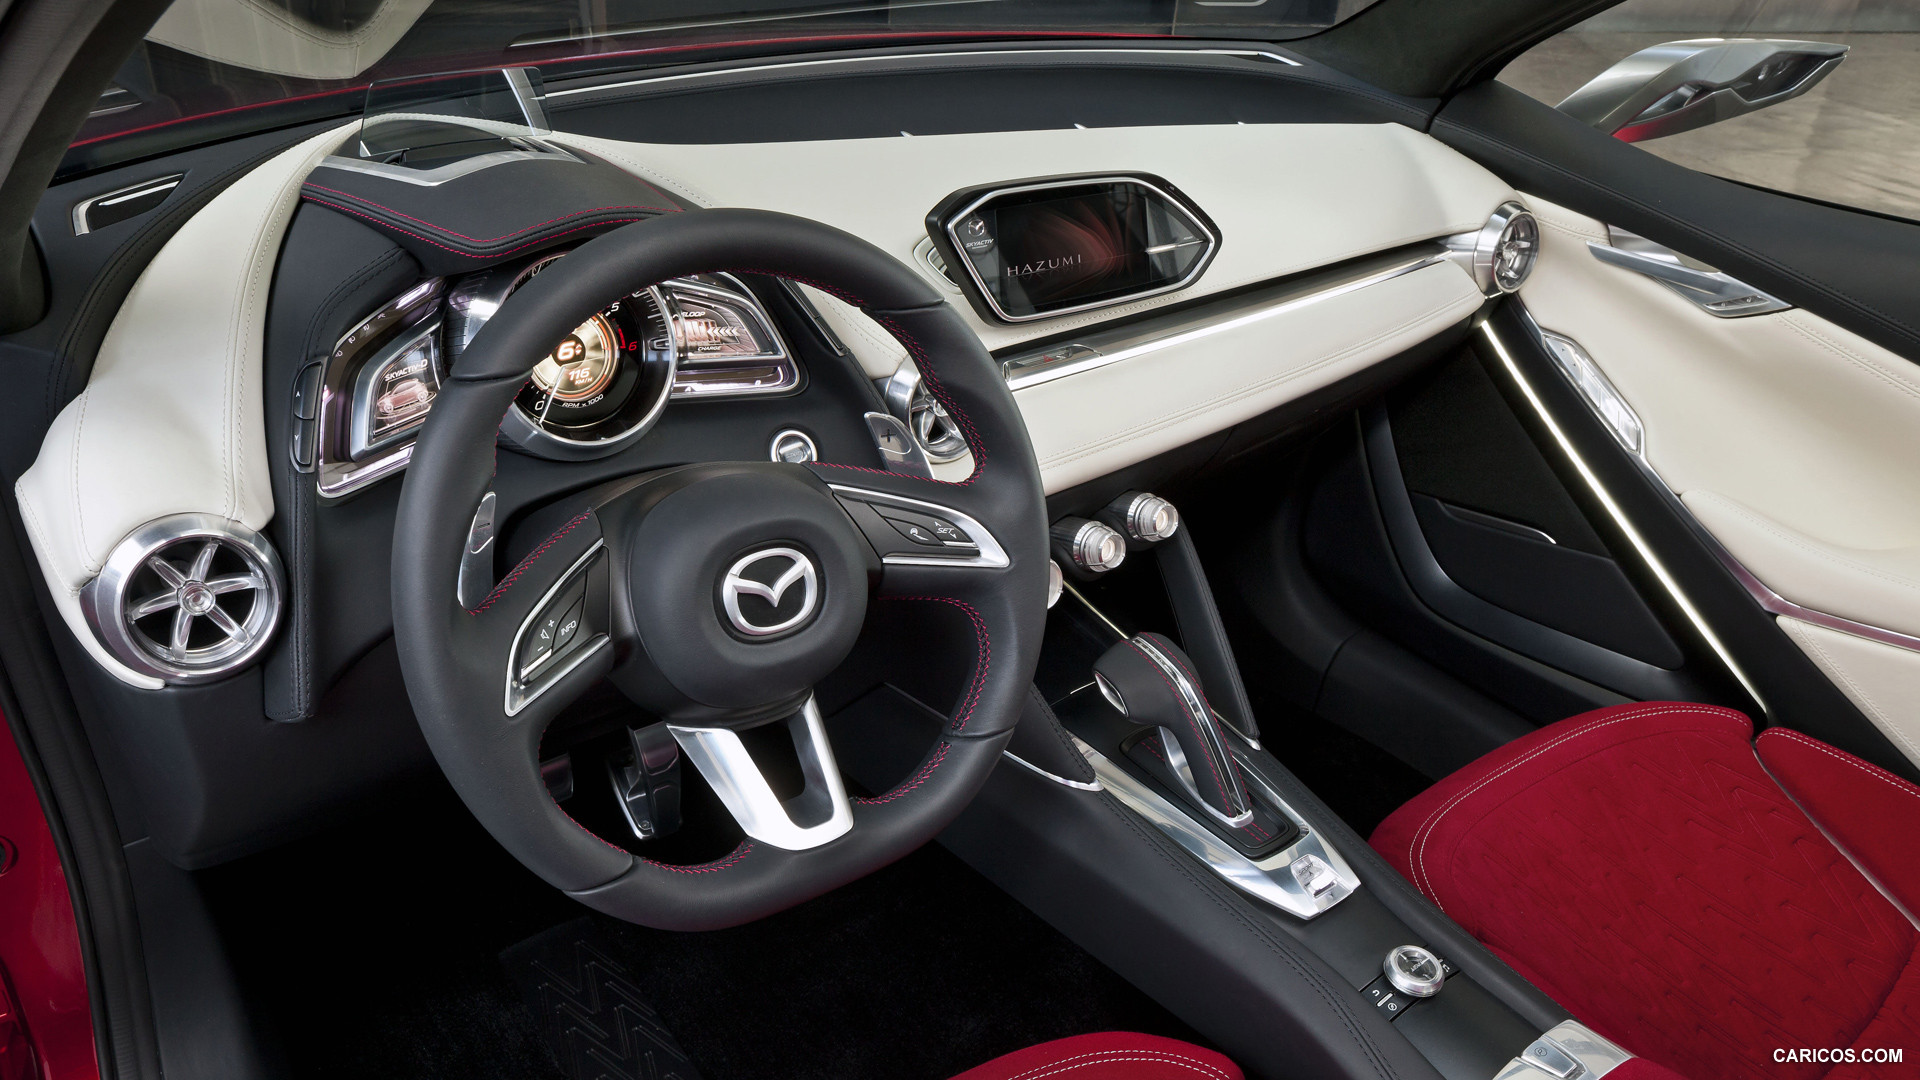 2014 Mazda Hazumi Concept  - Interior, #43 of 70